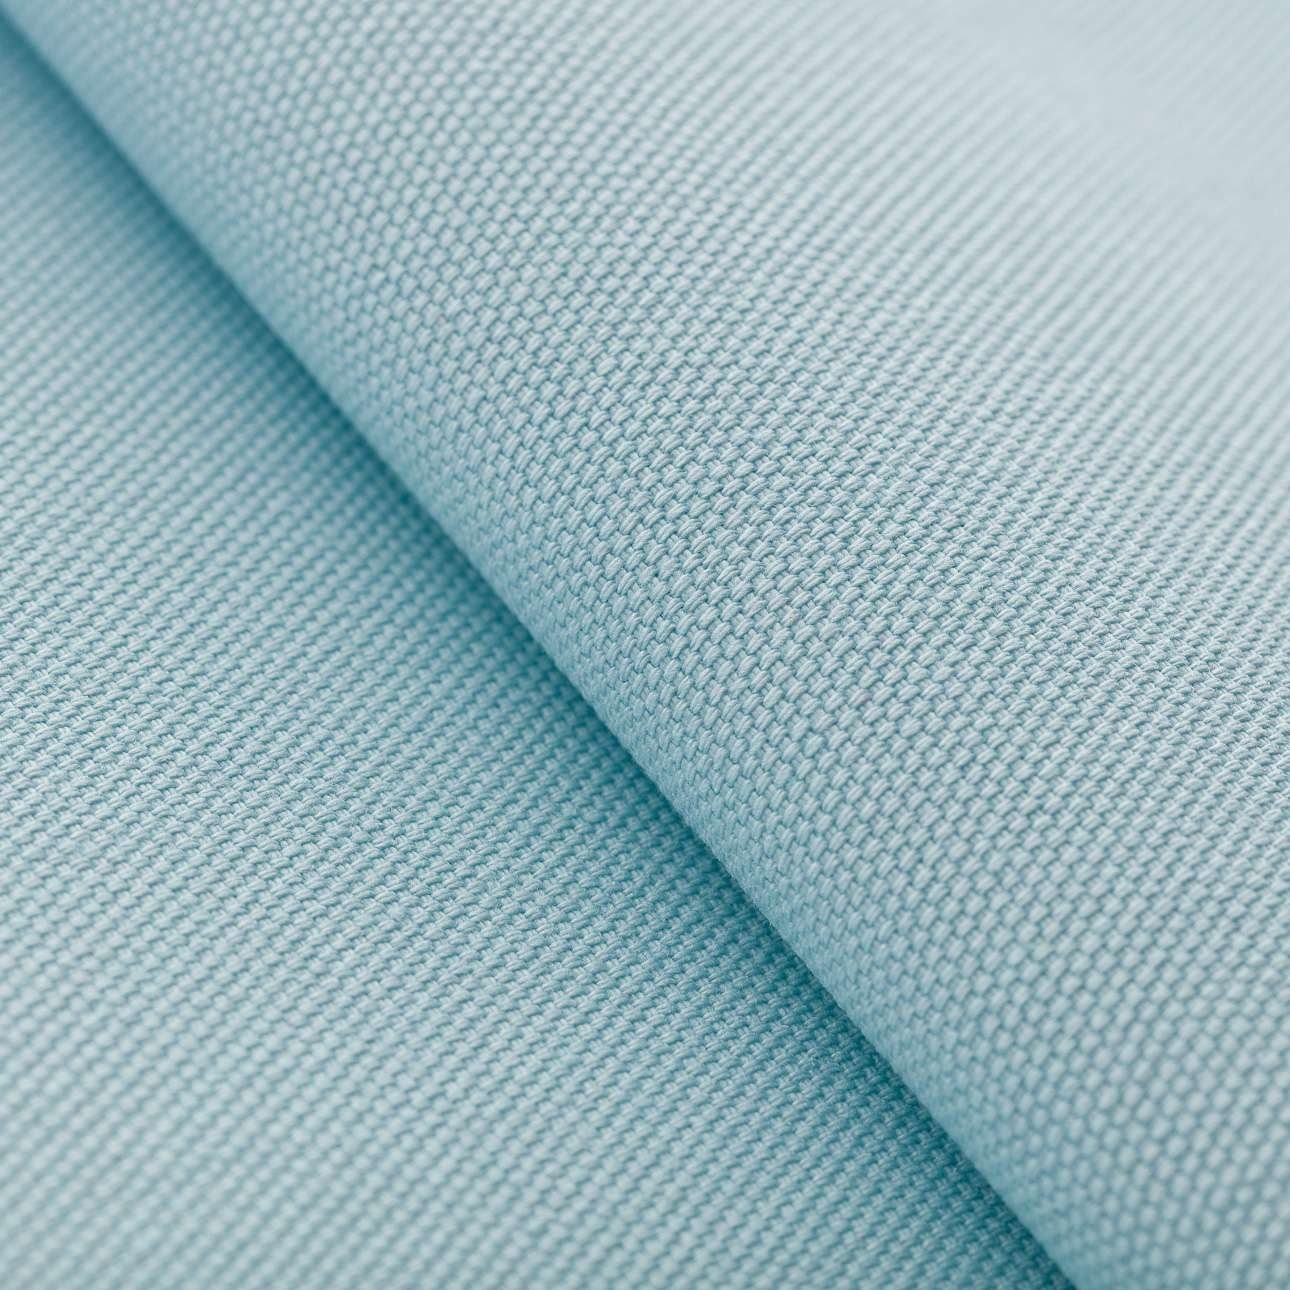 x mit Kräuselband Dekoria hellblau 130 cm, Cotton Vorhang 40 Panama,